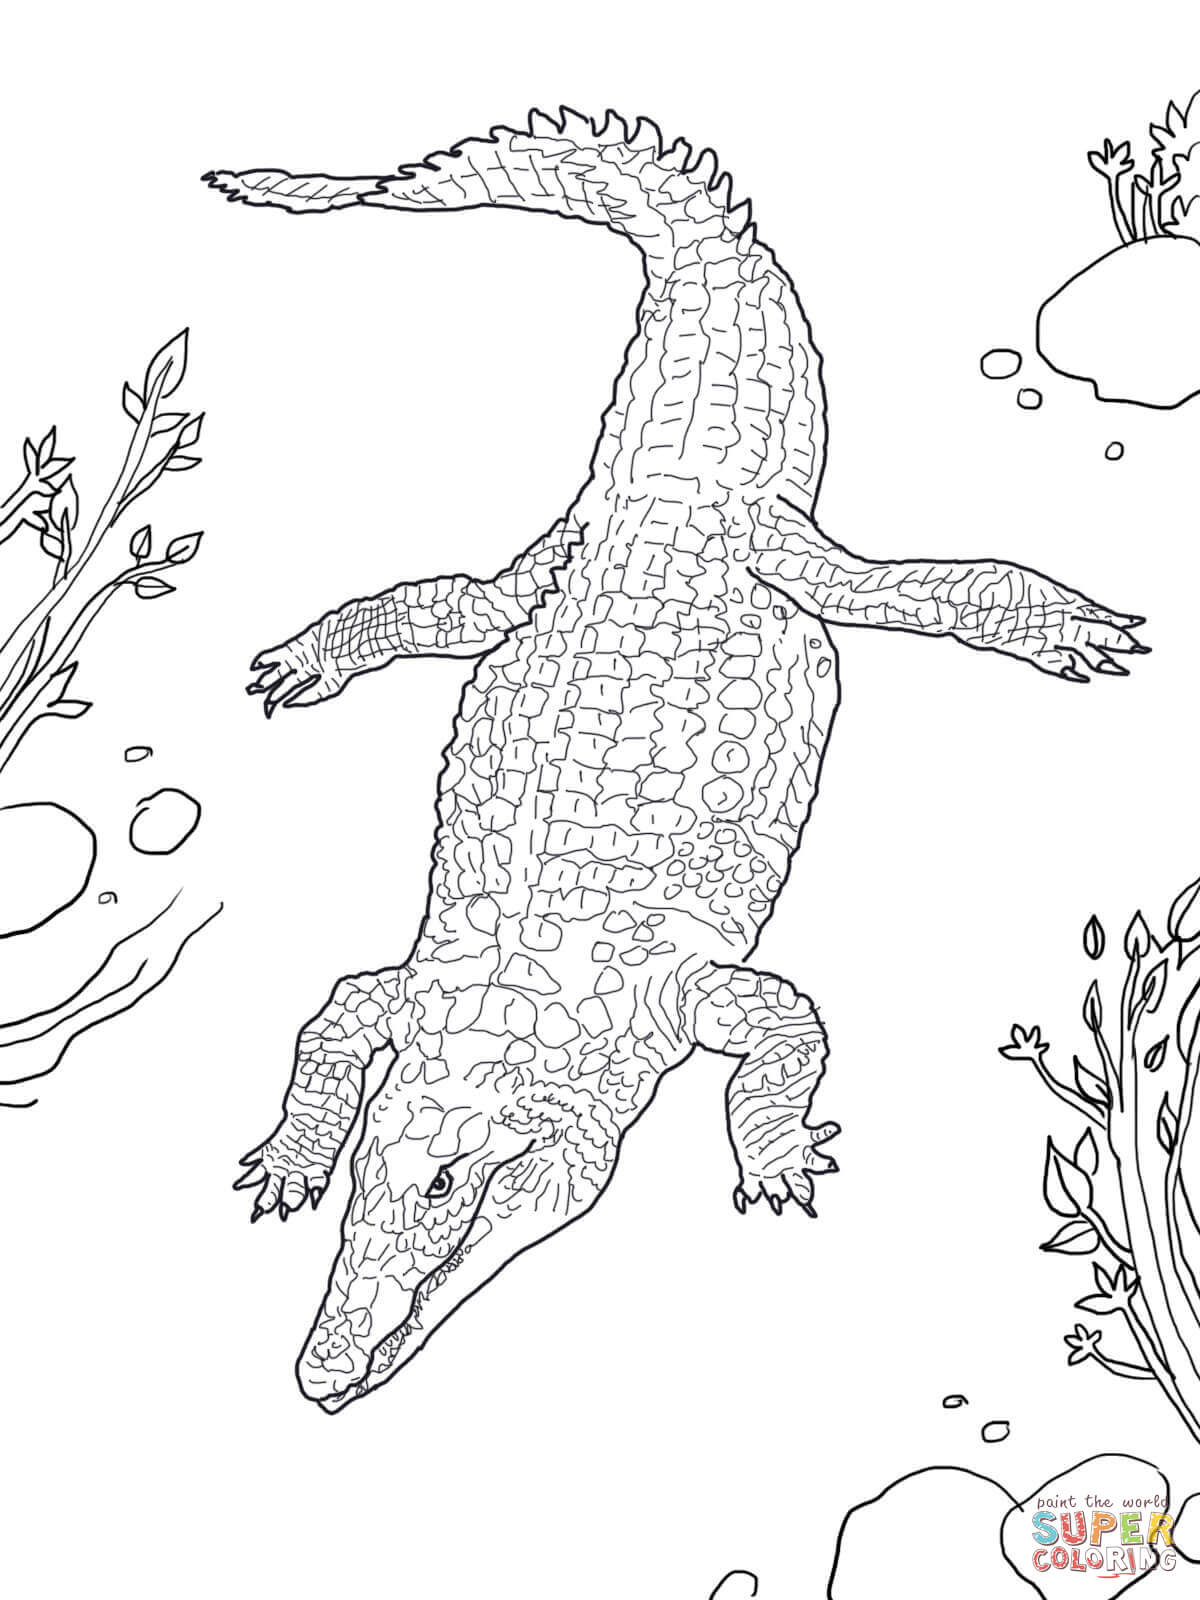 Nile Crocodile Coloring Page | Free Printable Coloring Pages - Free Printable Pictures Of Crocodiles